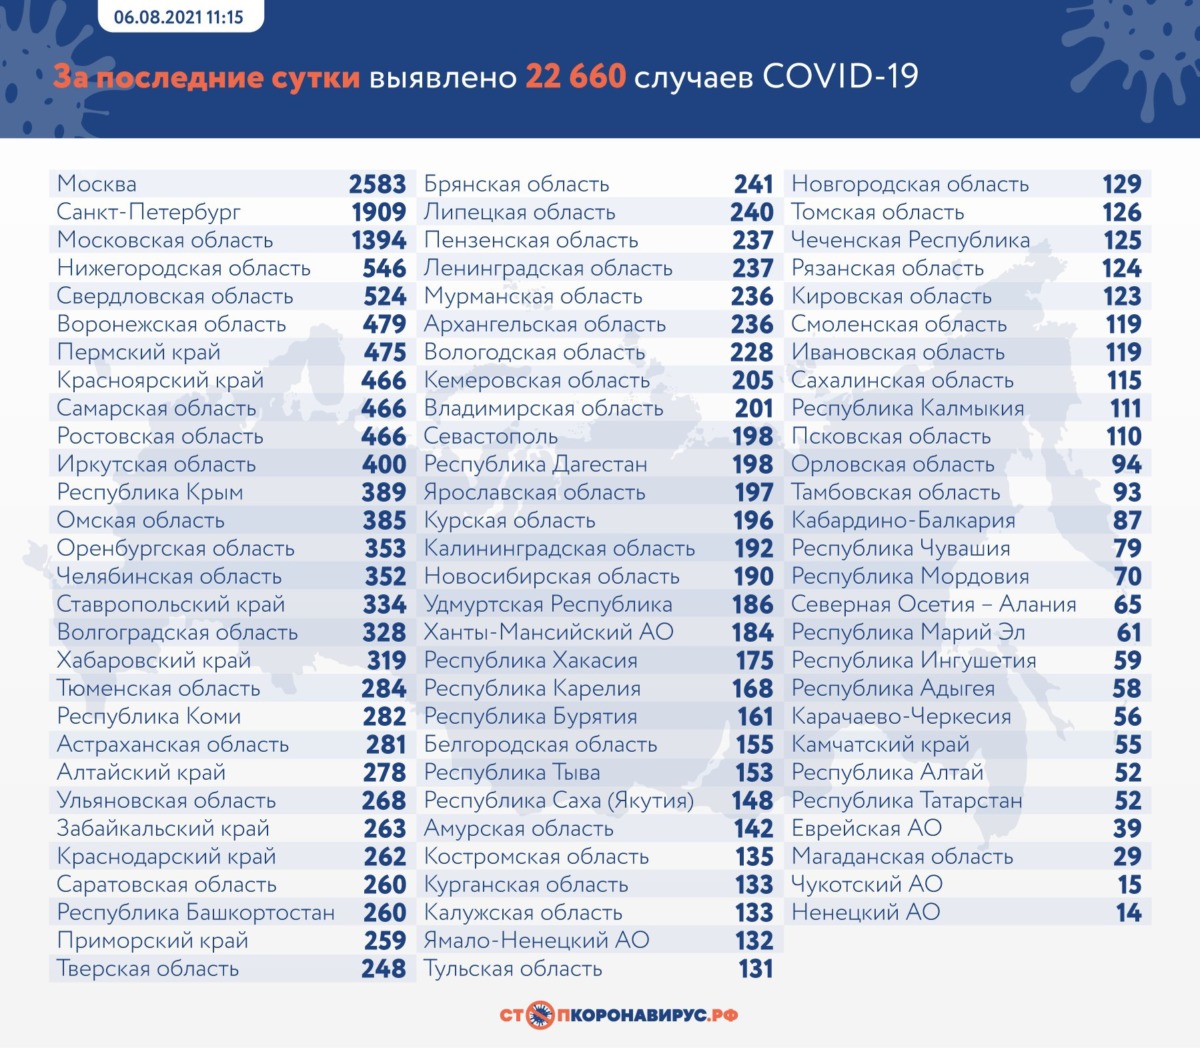 Статистика коронавируса в России на 6 августа